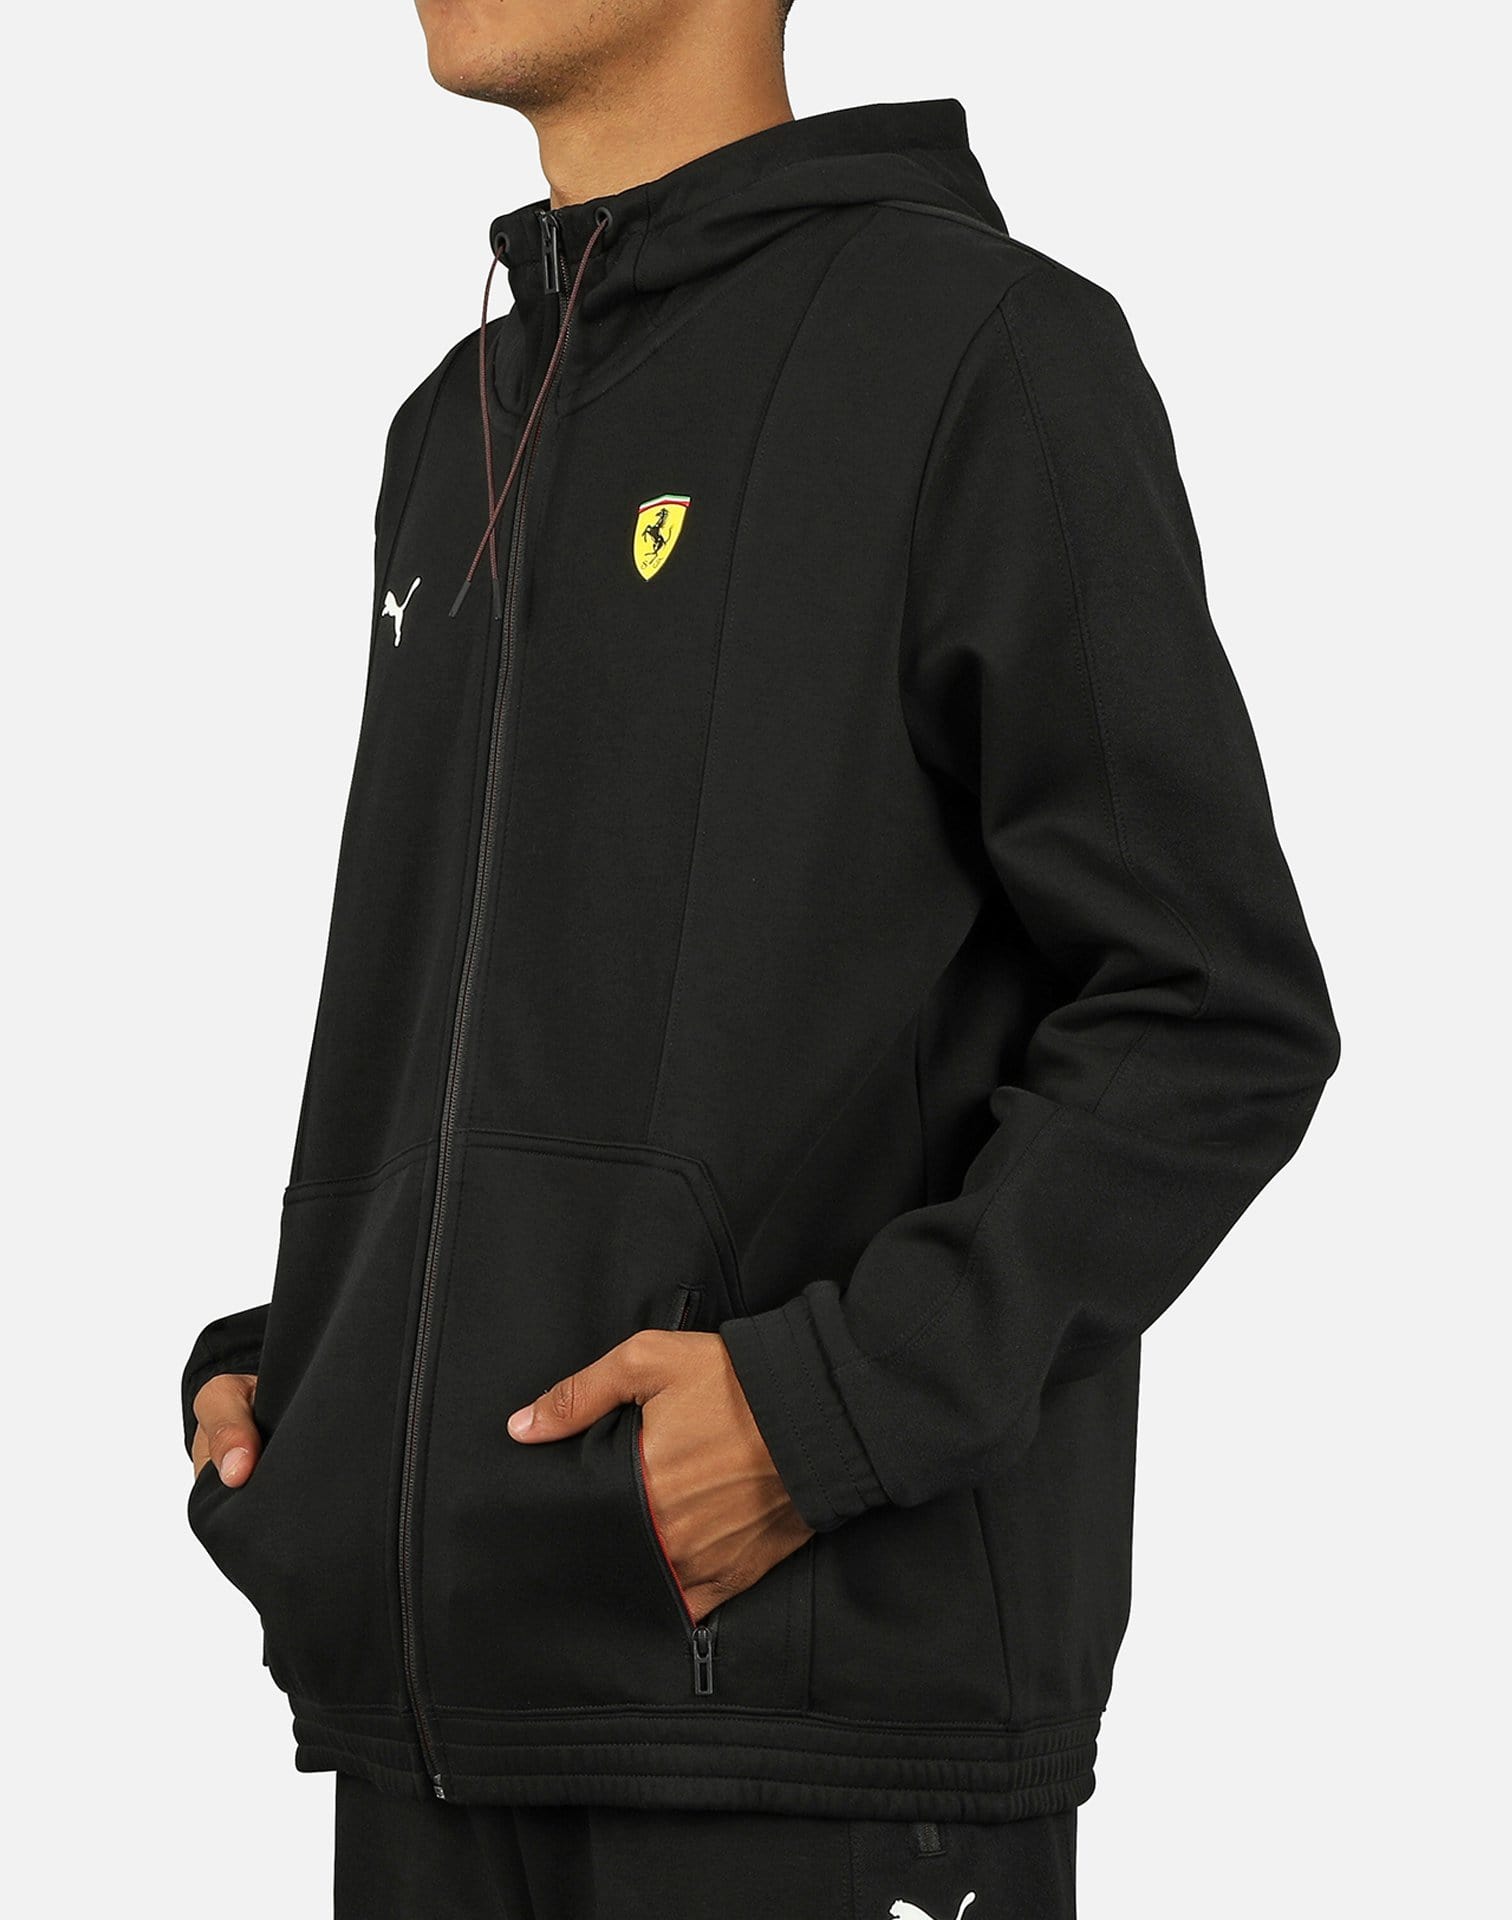 PUMA Men's Ferrari Hooded Sweat Jacket